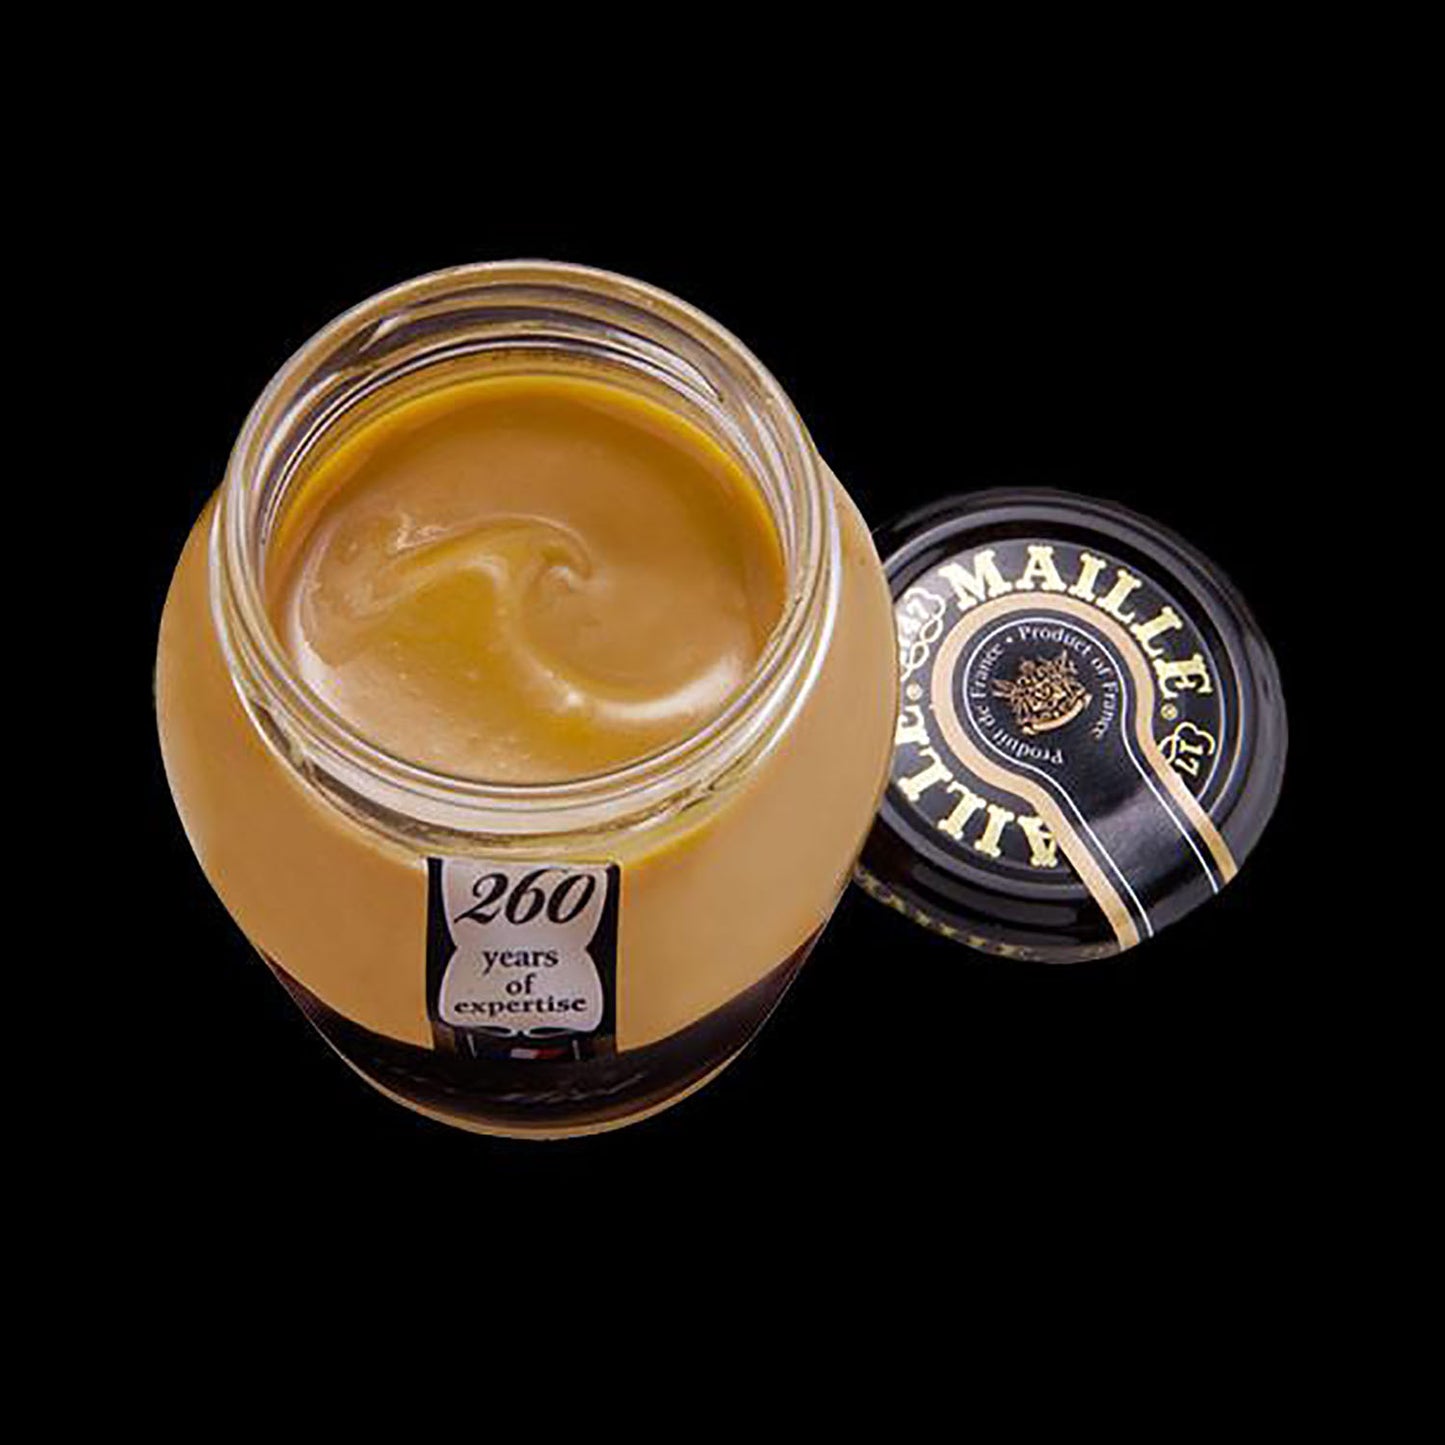 Maille Dijon Honey Mustard 230gm